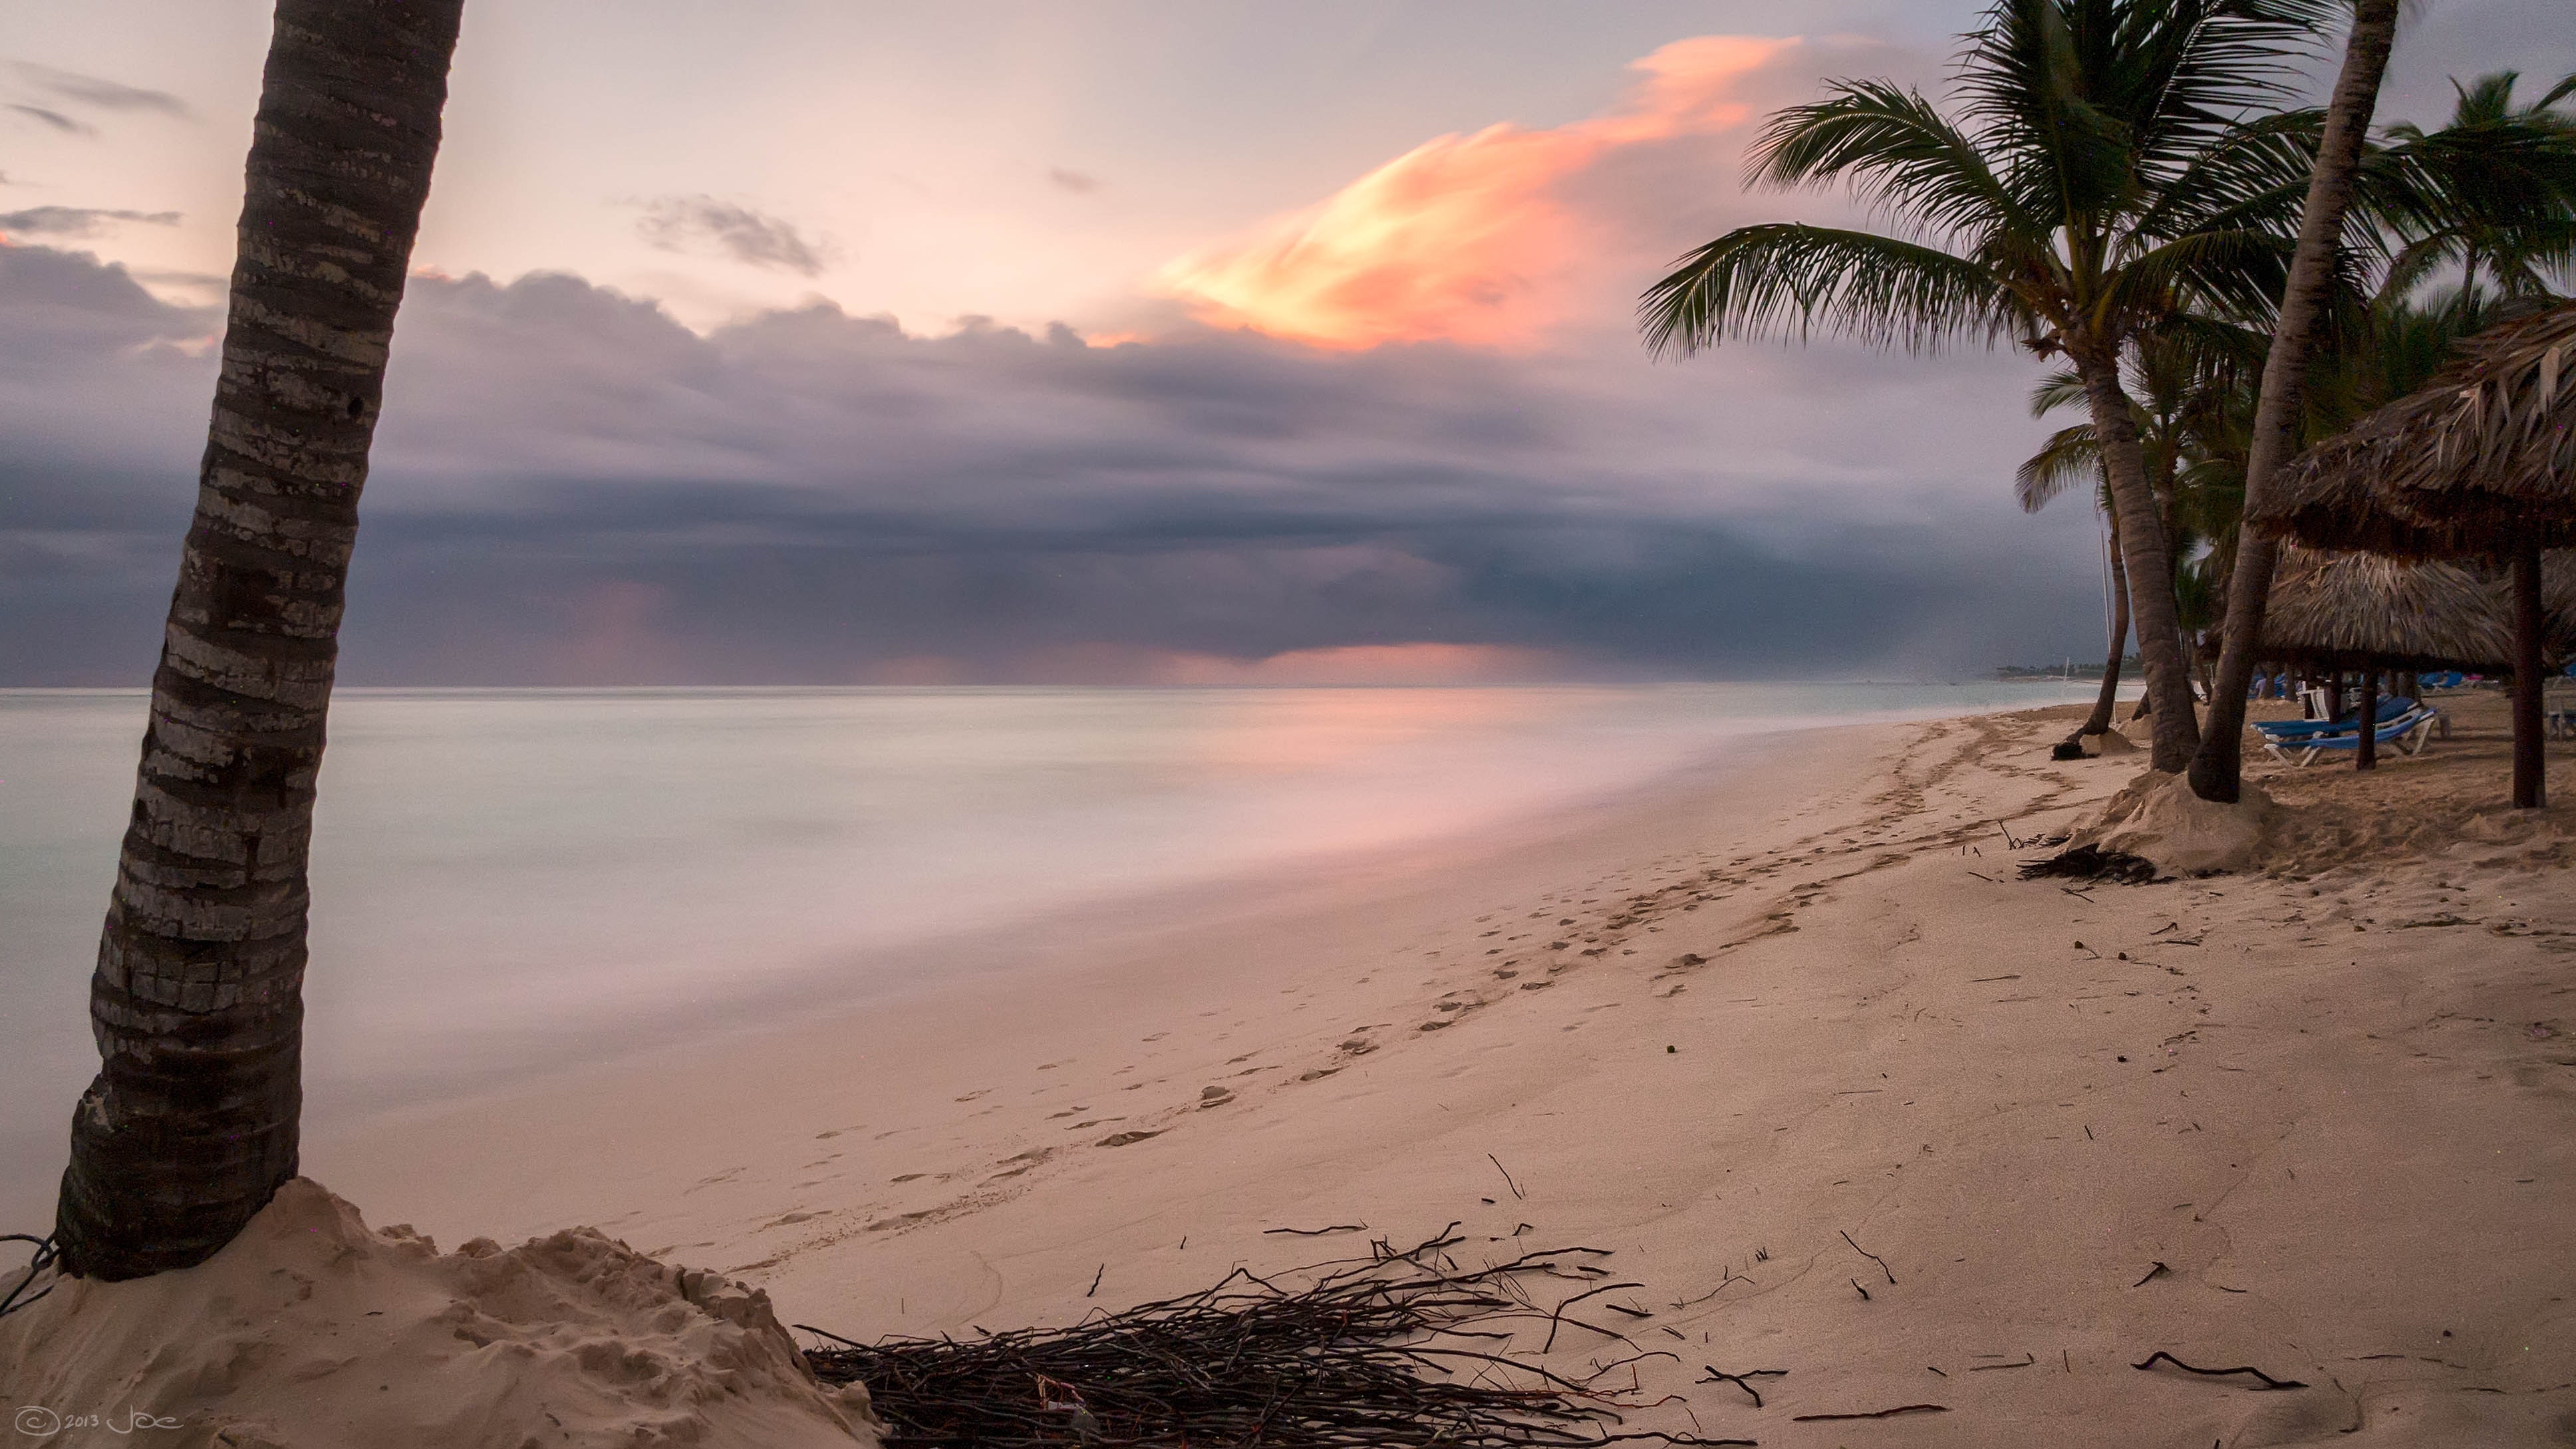 Palm tree on shore near body of water under orange sunset photo